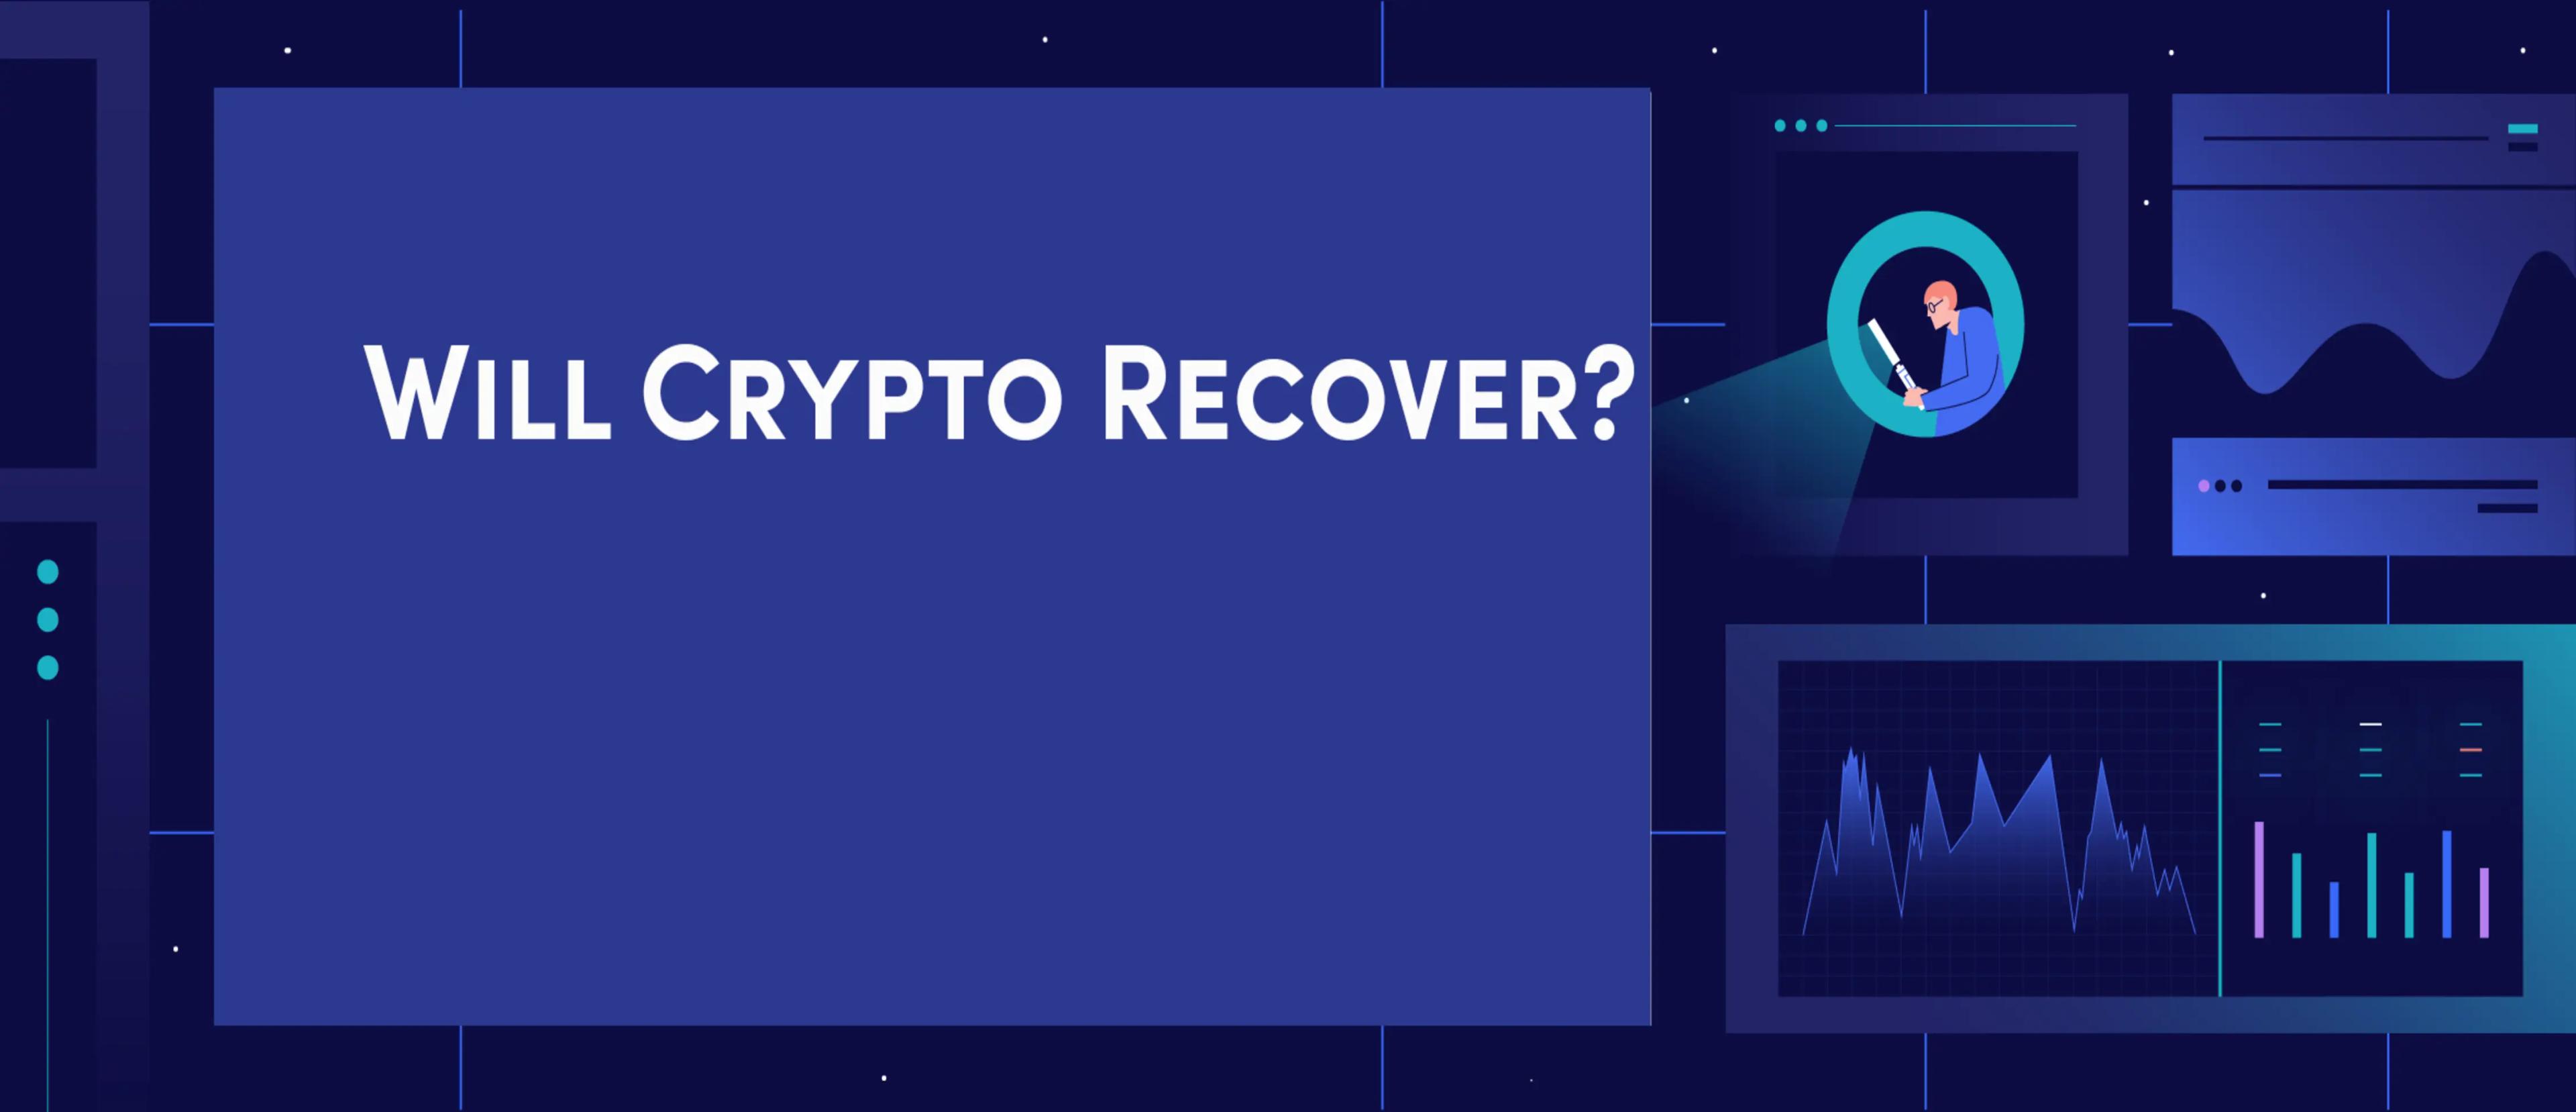 Will Crypto Recover?